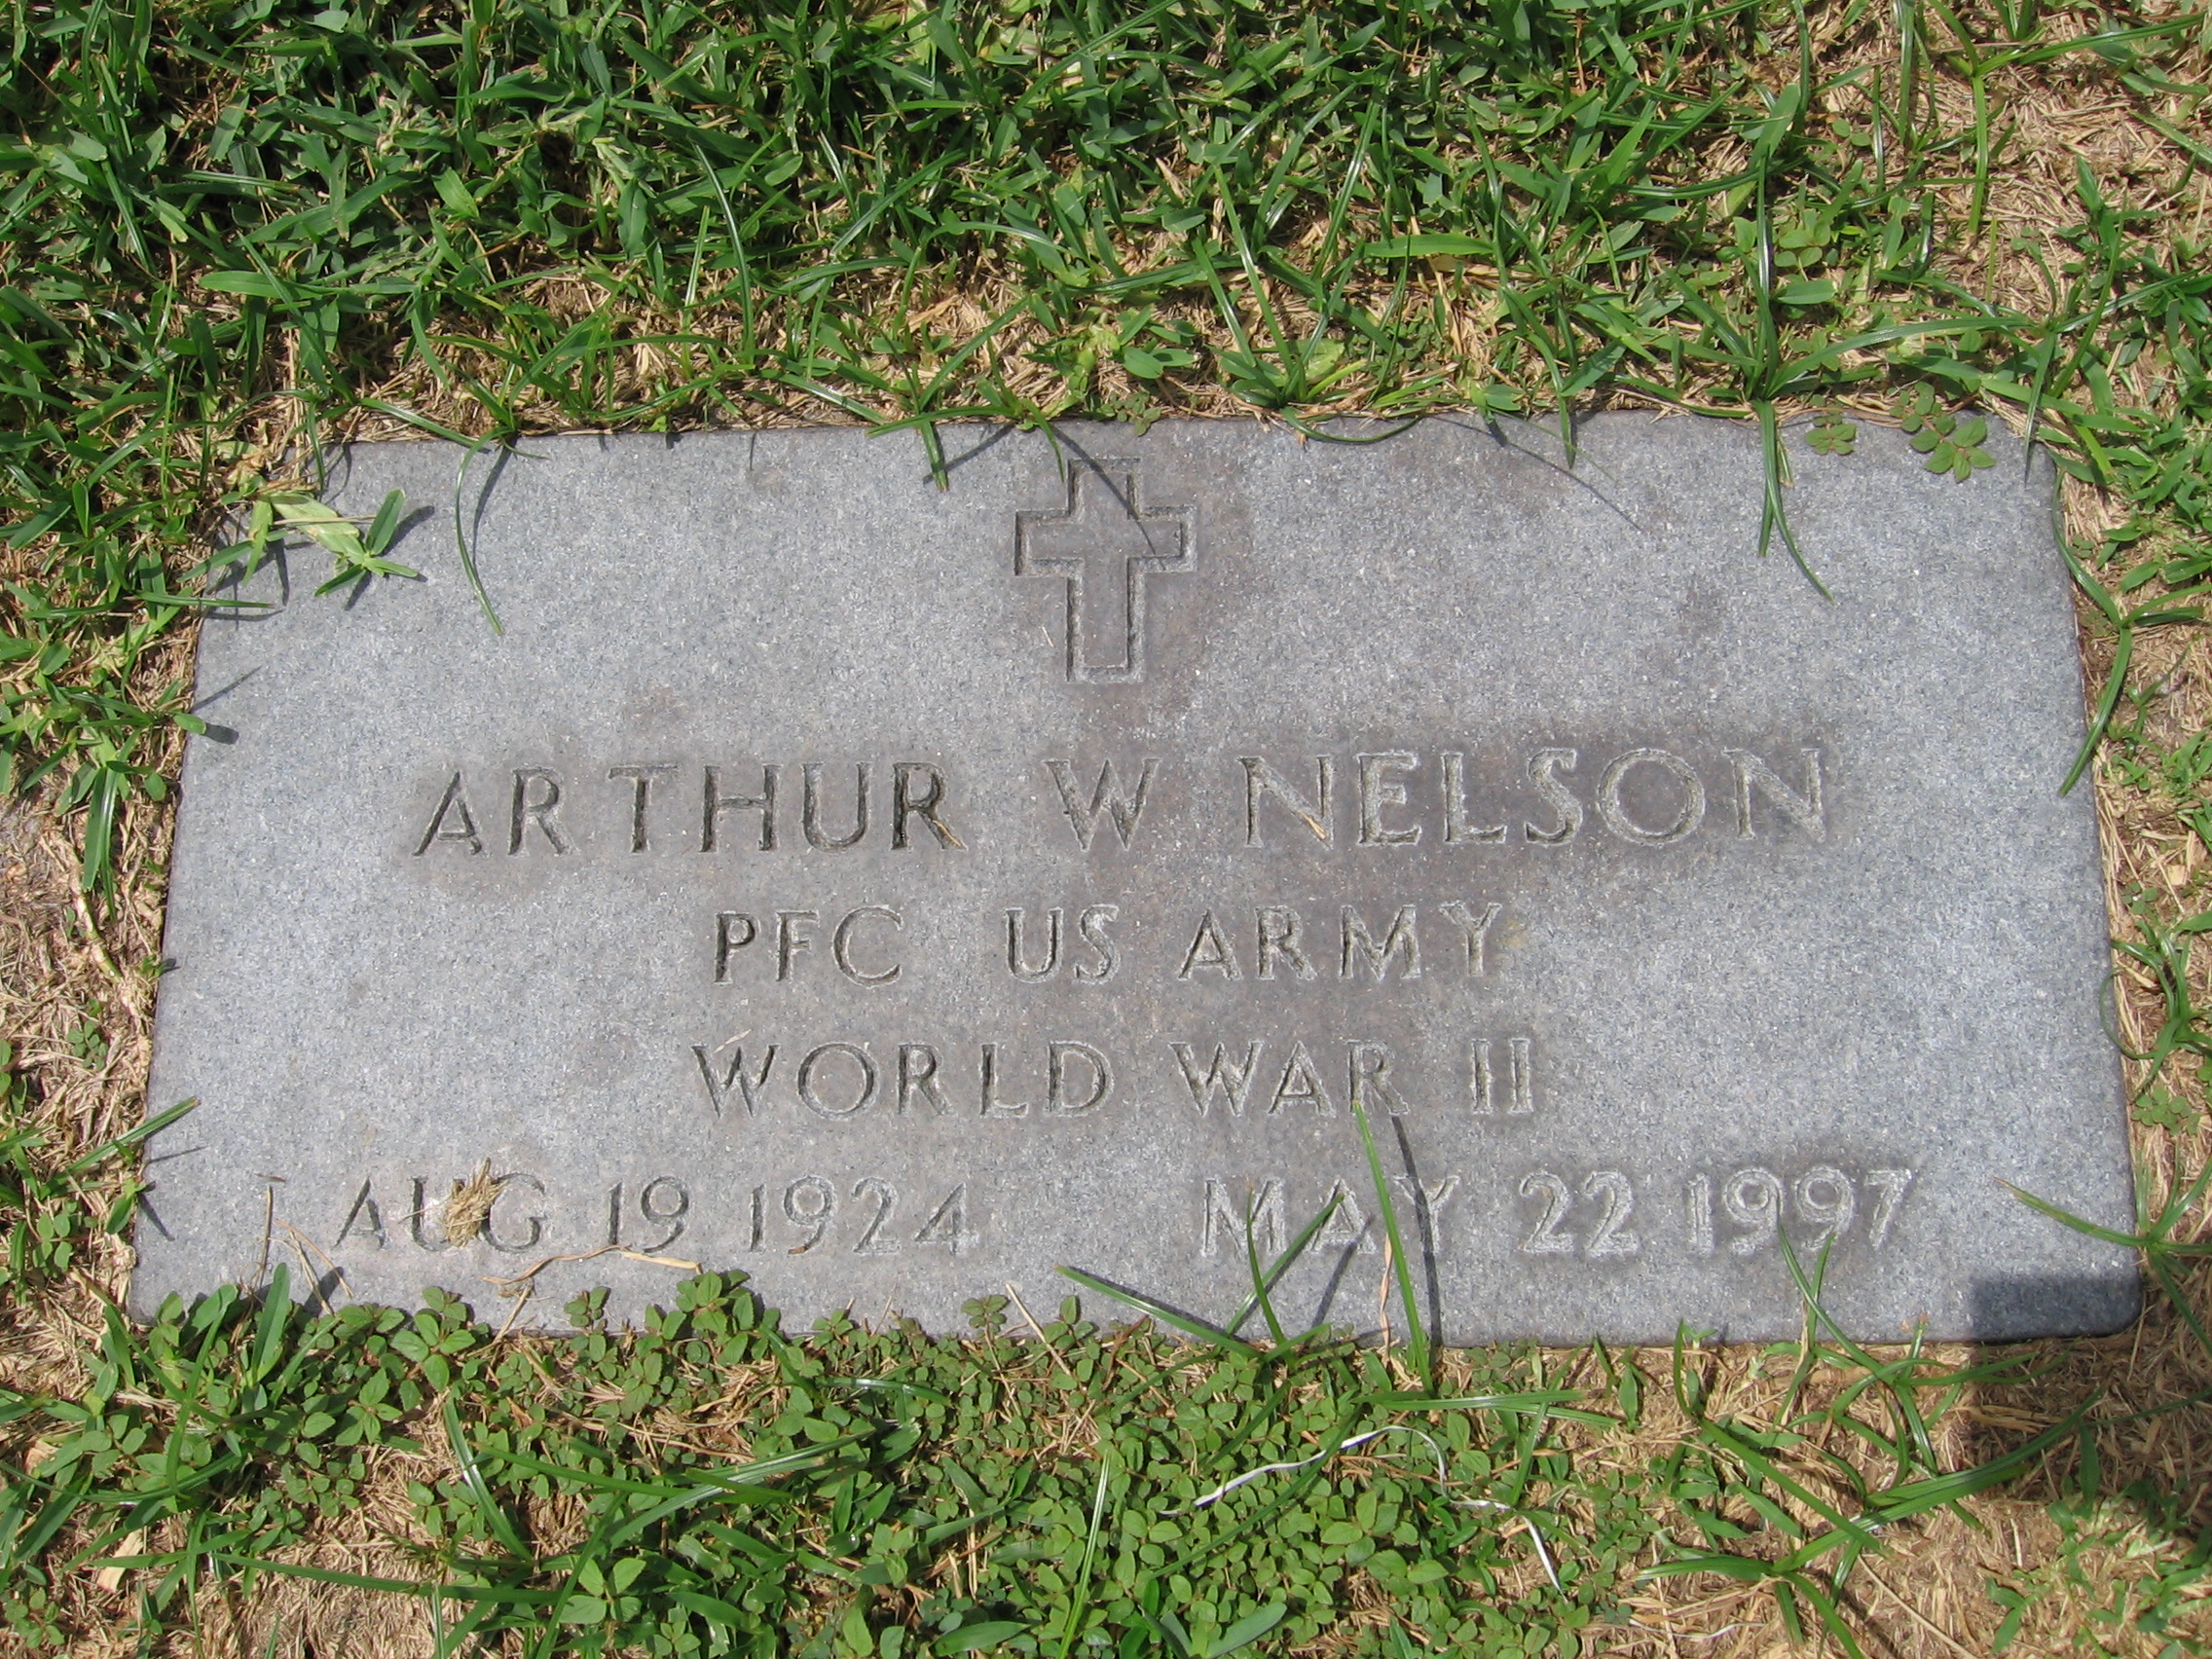 PFC Arthur W Nelson